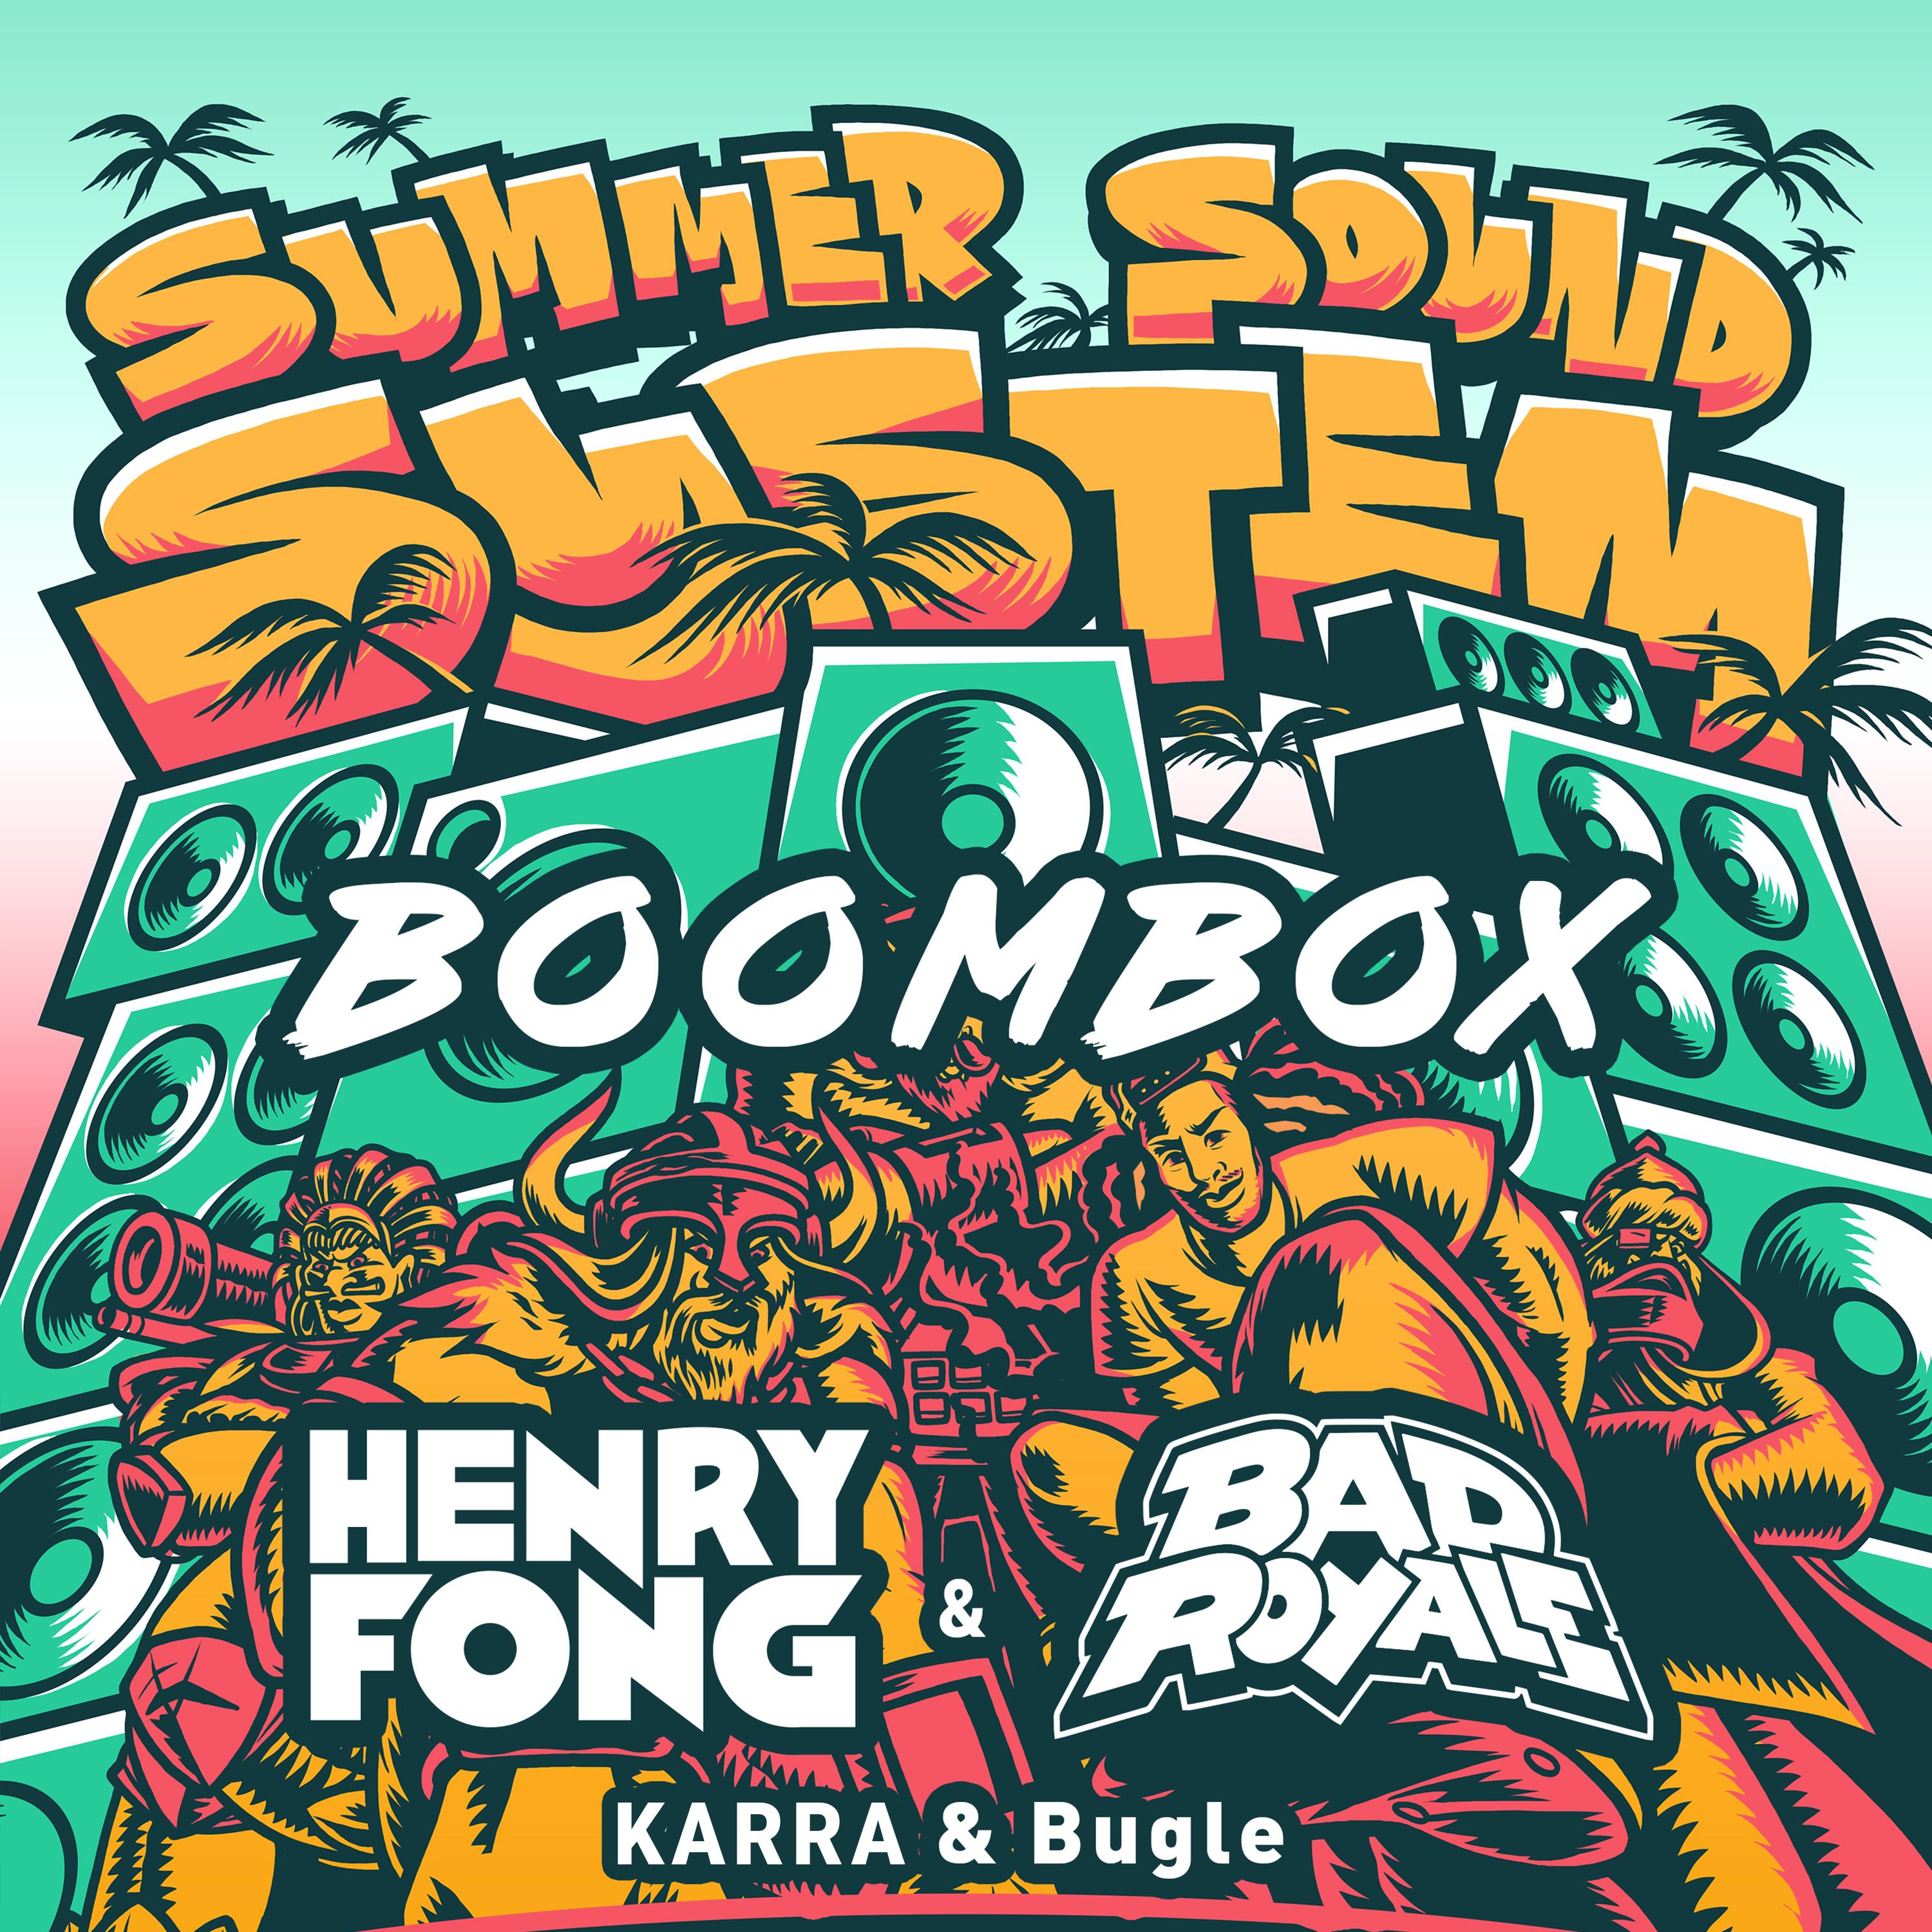 Boombox (feat. KARRA & Bugle)